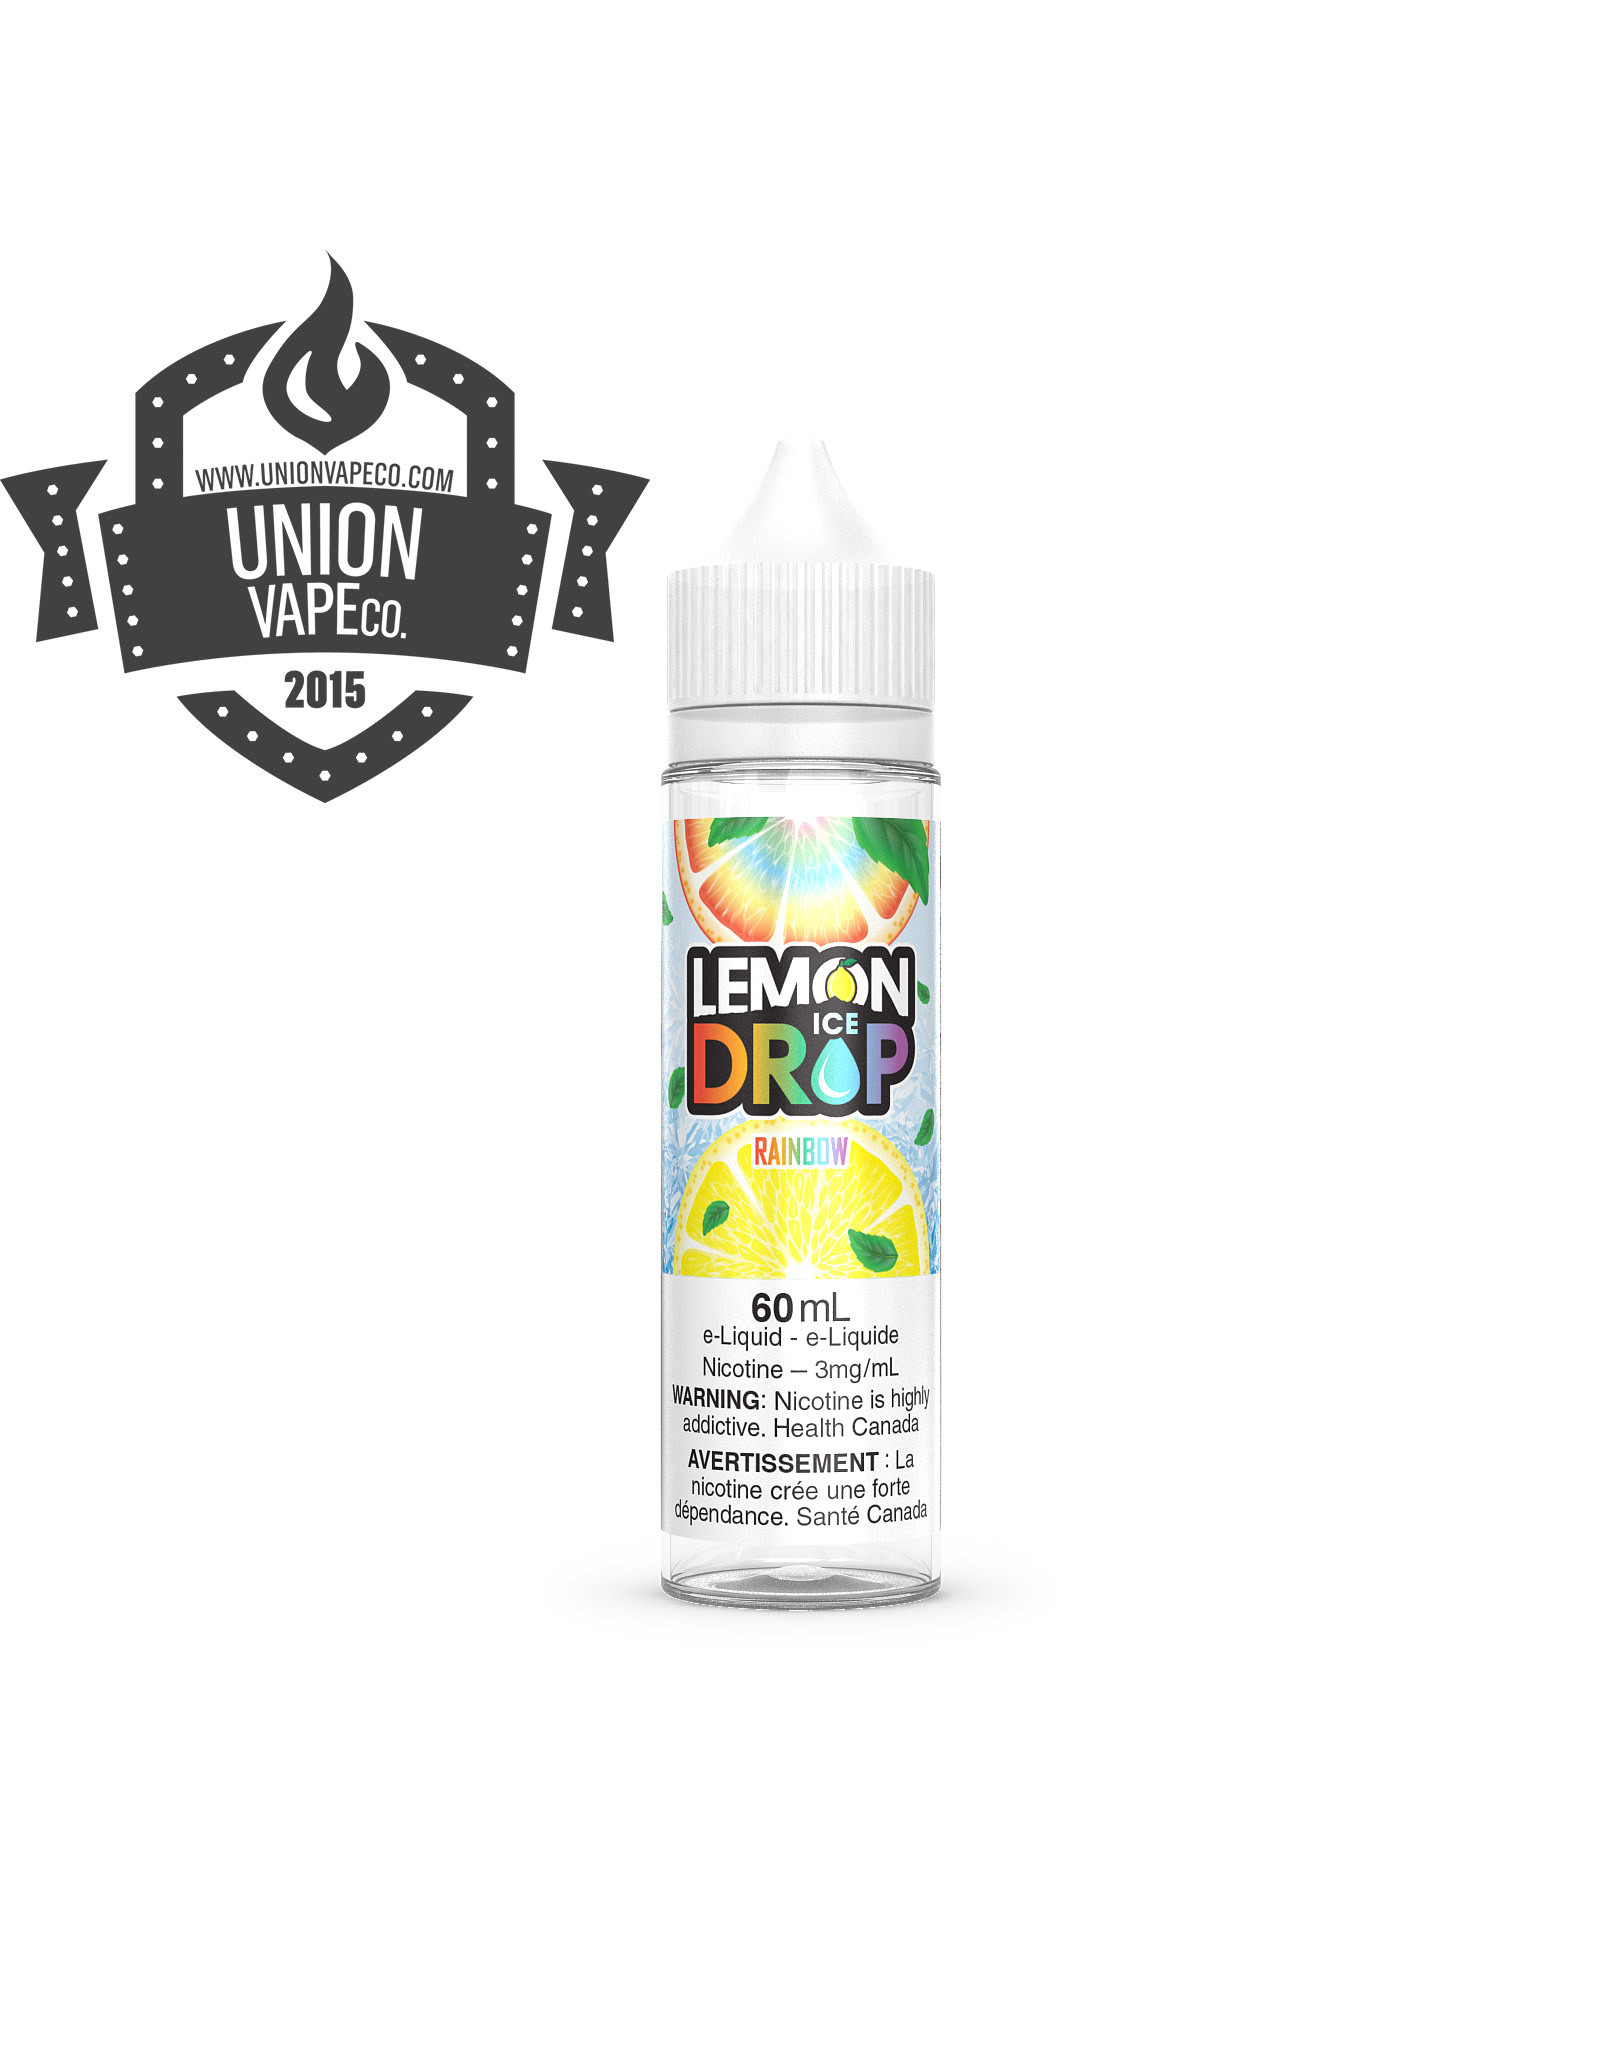 Lemon Drop Lemon Drop Ice - Punch Ice (Rainbow Ice)(60ml)